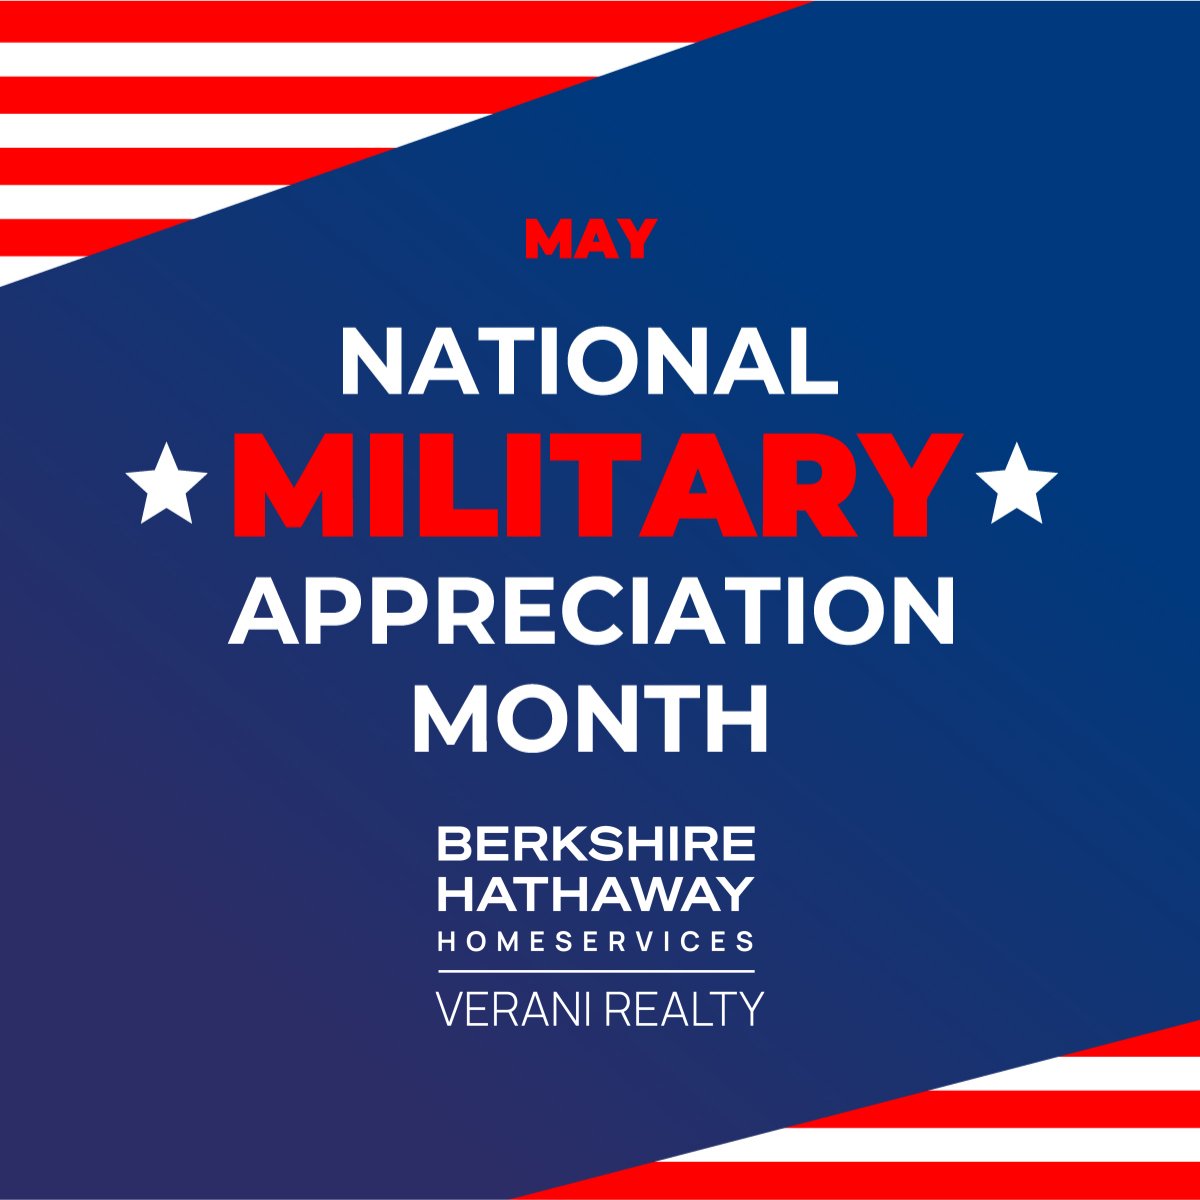 Happy Military Appreciation Month!
#BHHS
#BHHSRealEstate
#BHHSVeraniRealty
#NHRealtor
#NHRealEstate
#ForeverAgent
#TeamYJ